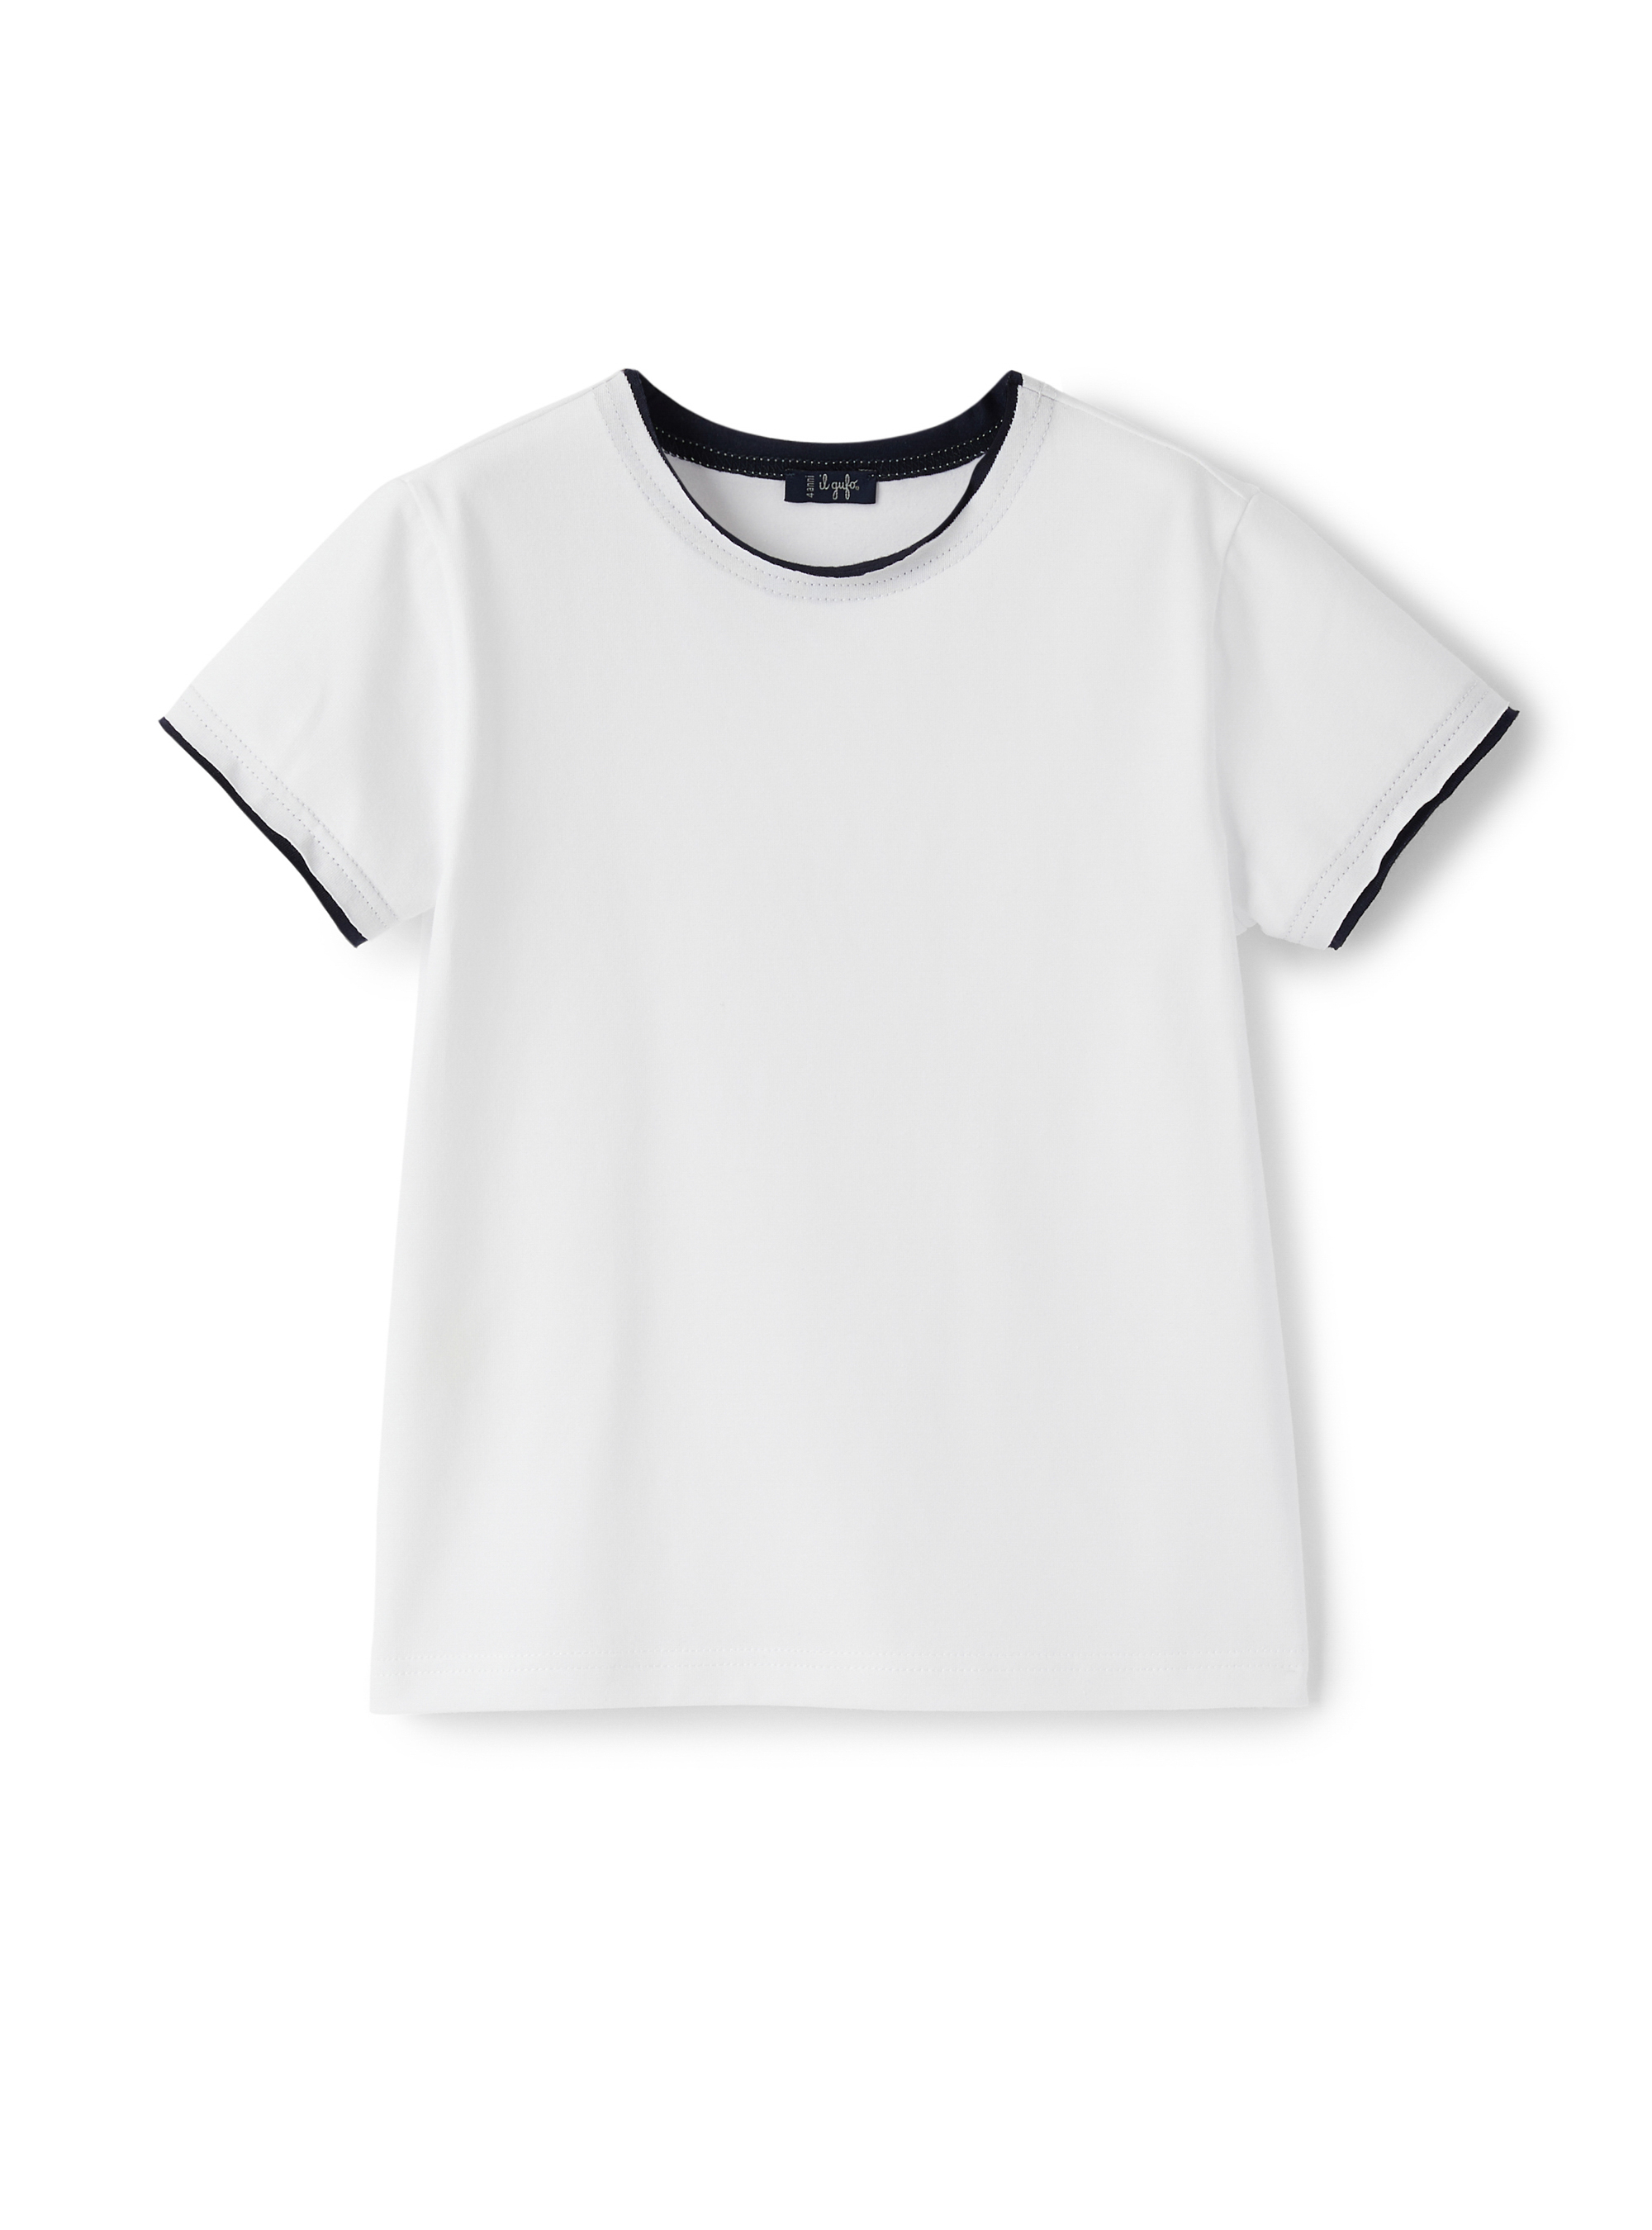 White t-shirt with blue profiles - White | Il Gufo